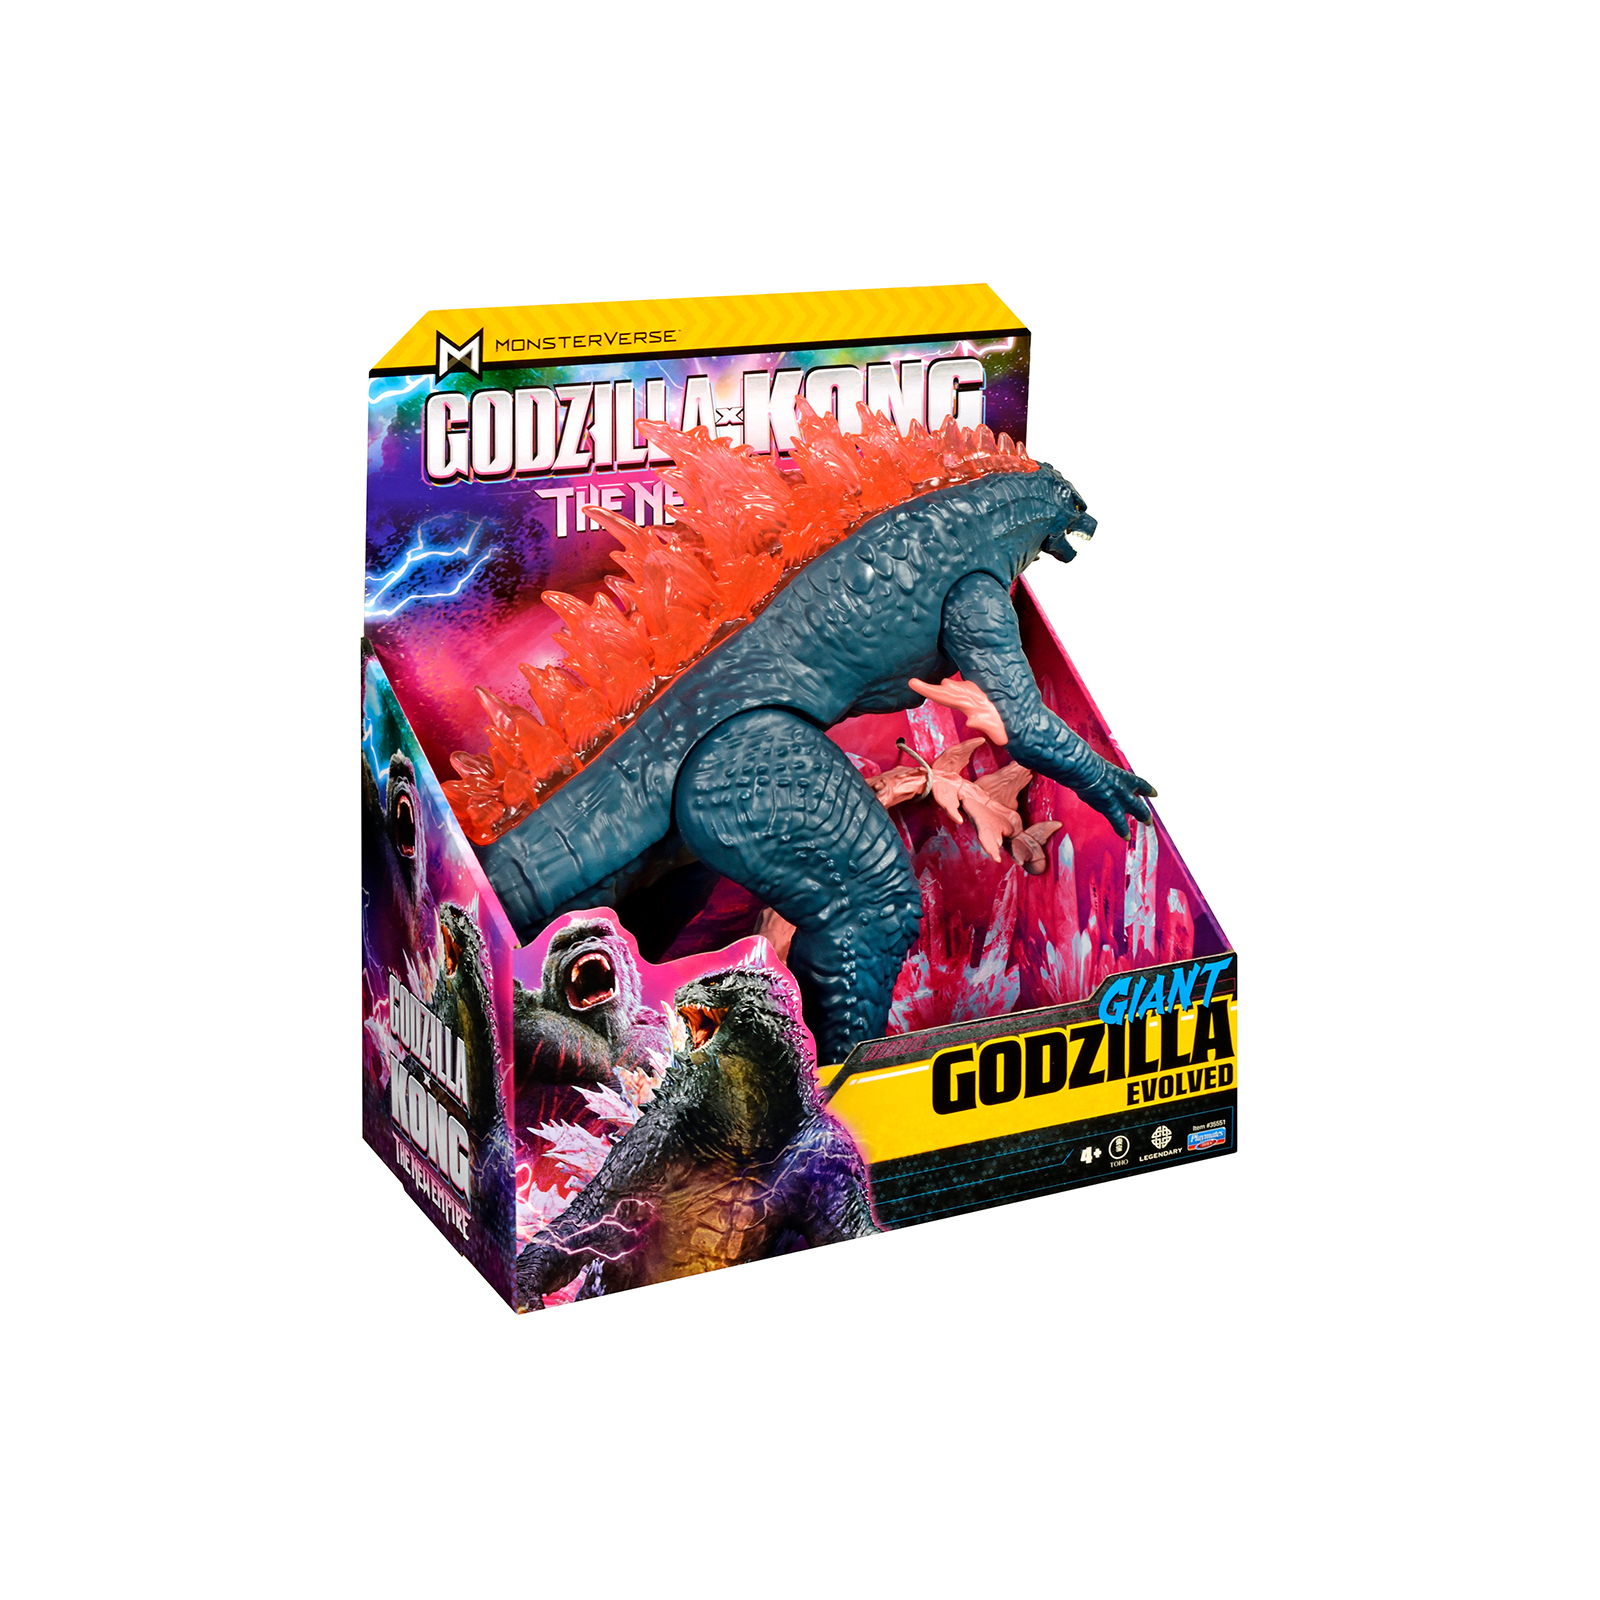 Фигурка Godzilla vs. Kong Годзилла гигант (35551) изображение 5